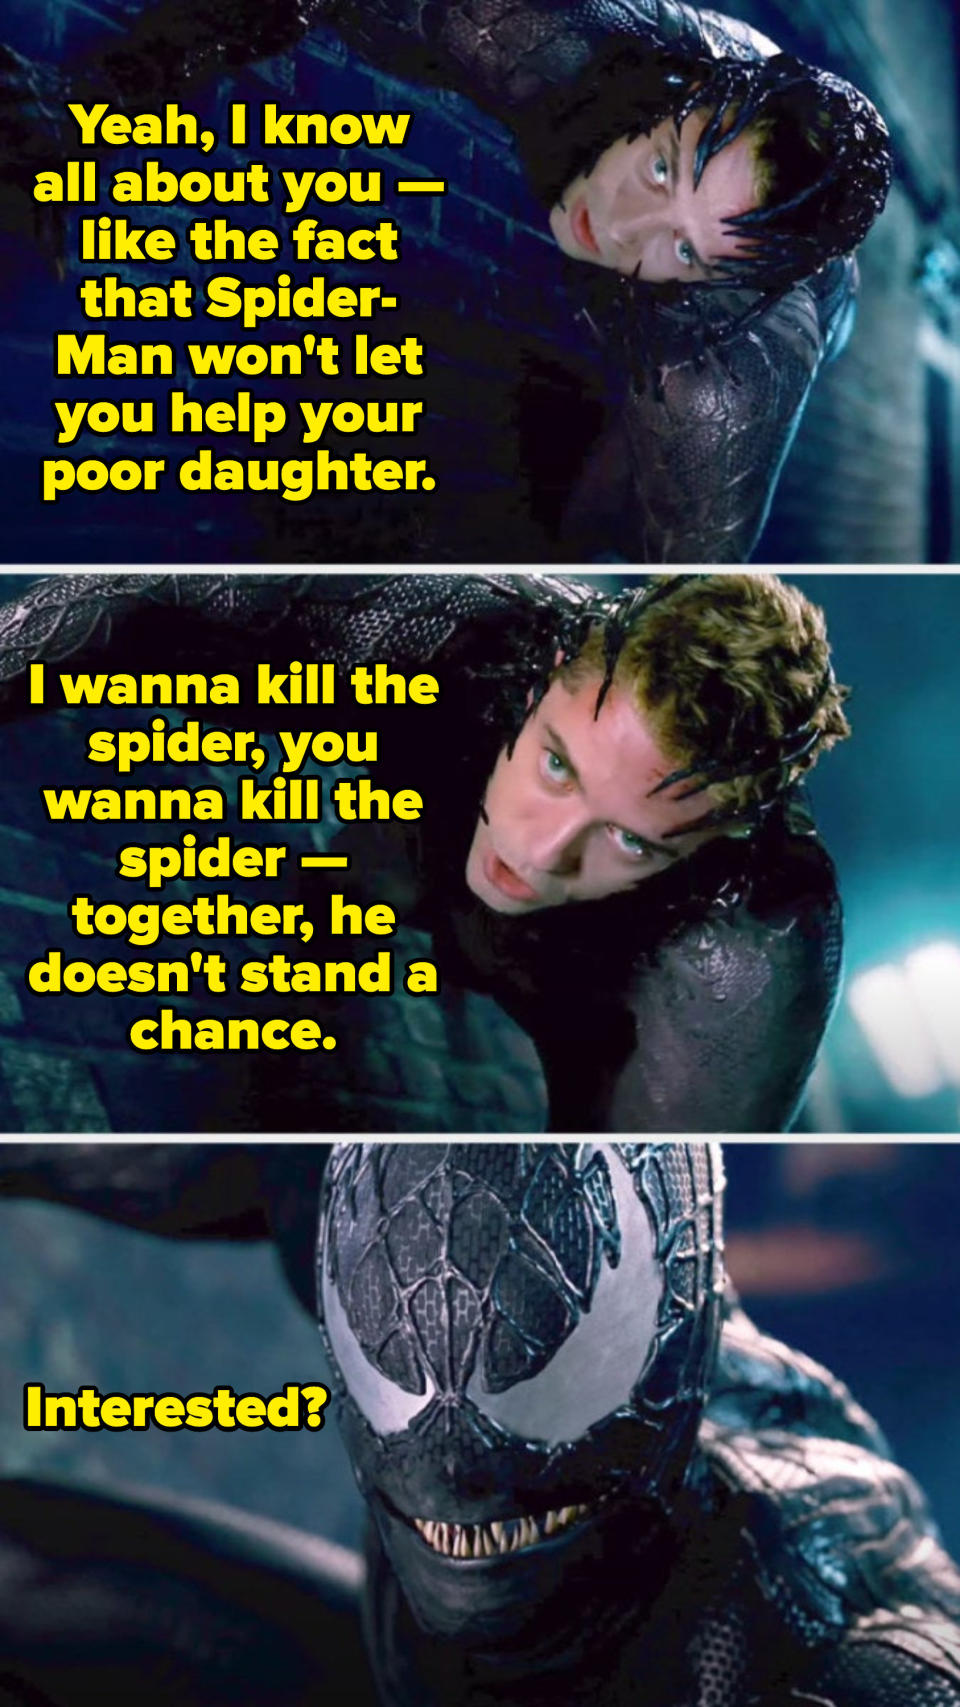 Venom telling Flint: "I wanna kill the spider, you wanna kill the spider — together, he doesn't stand a chance. Interested?"